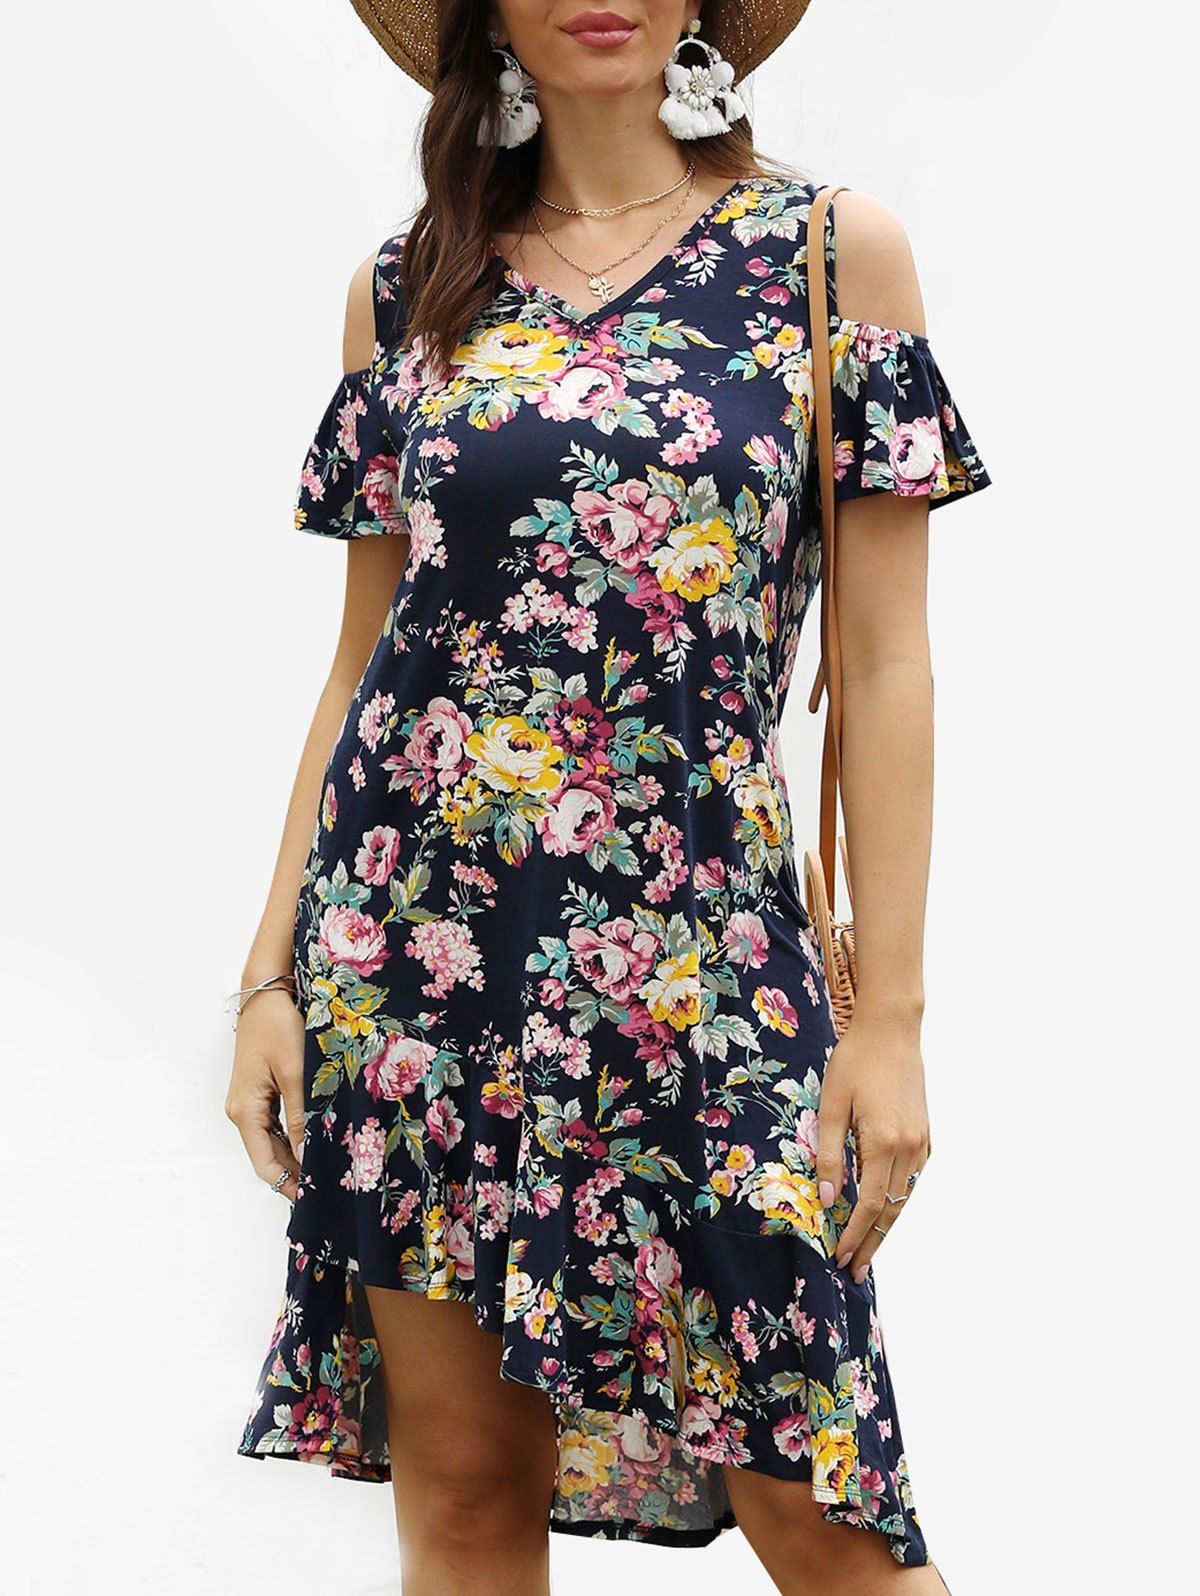 Floral Print Cold Shoulder Asymmetric Dress - BLACK S